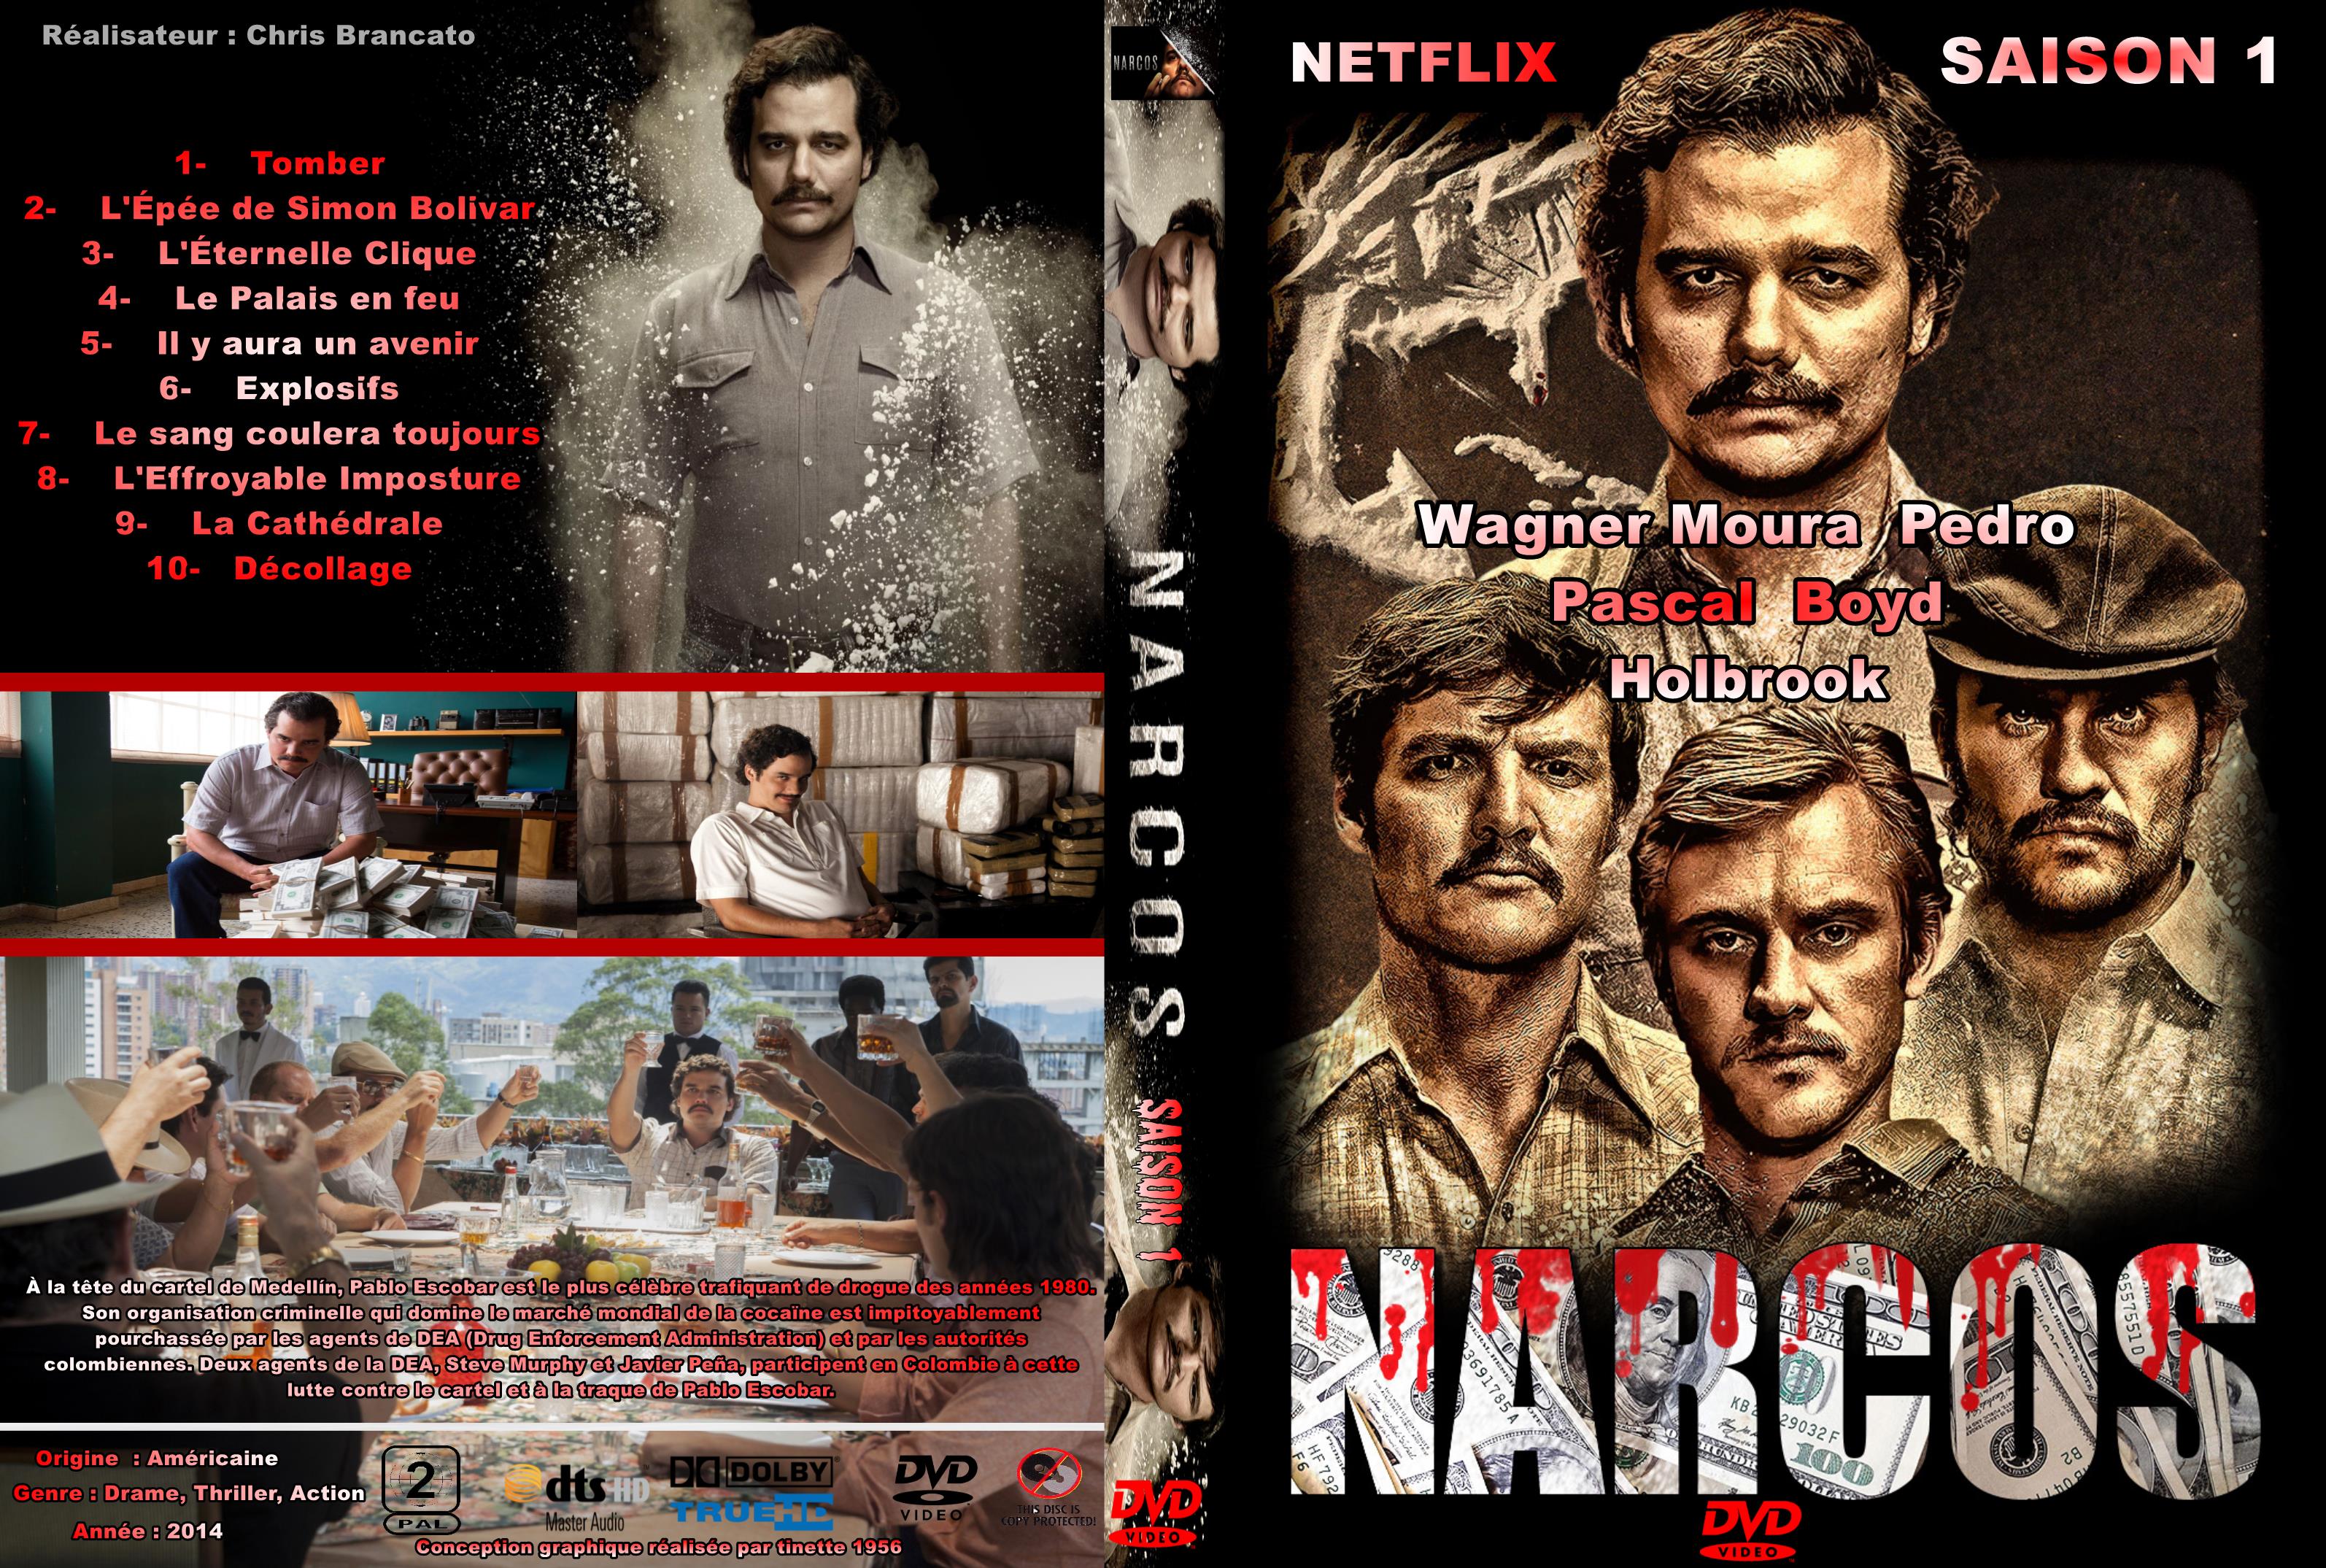 Jaquette DVD Narcos saison 1 custom